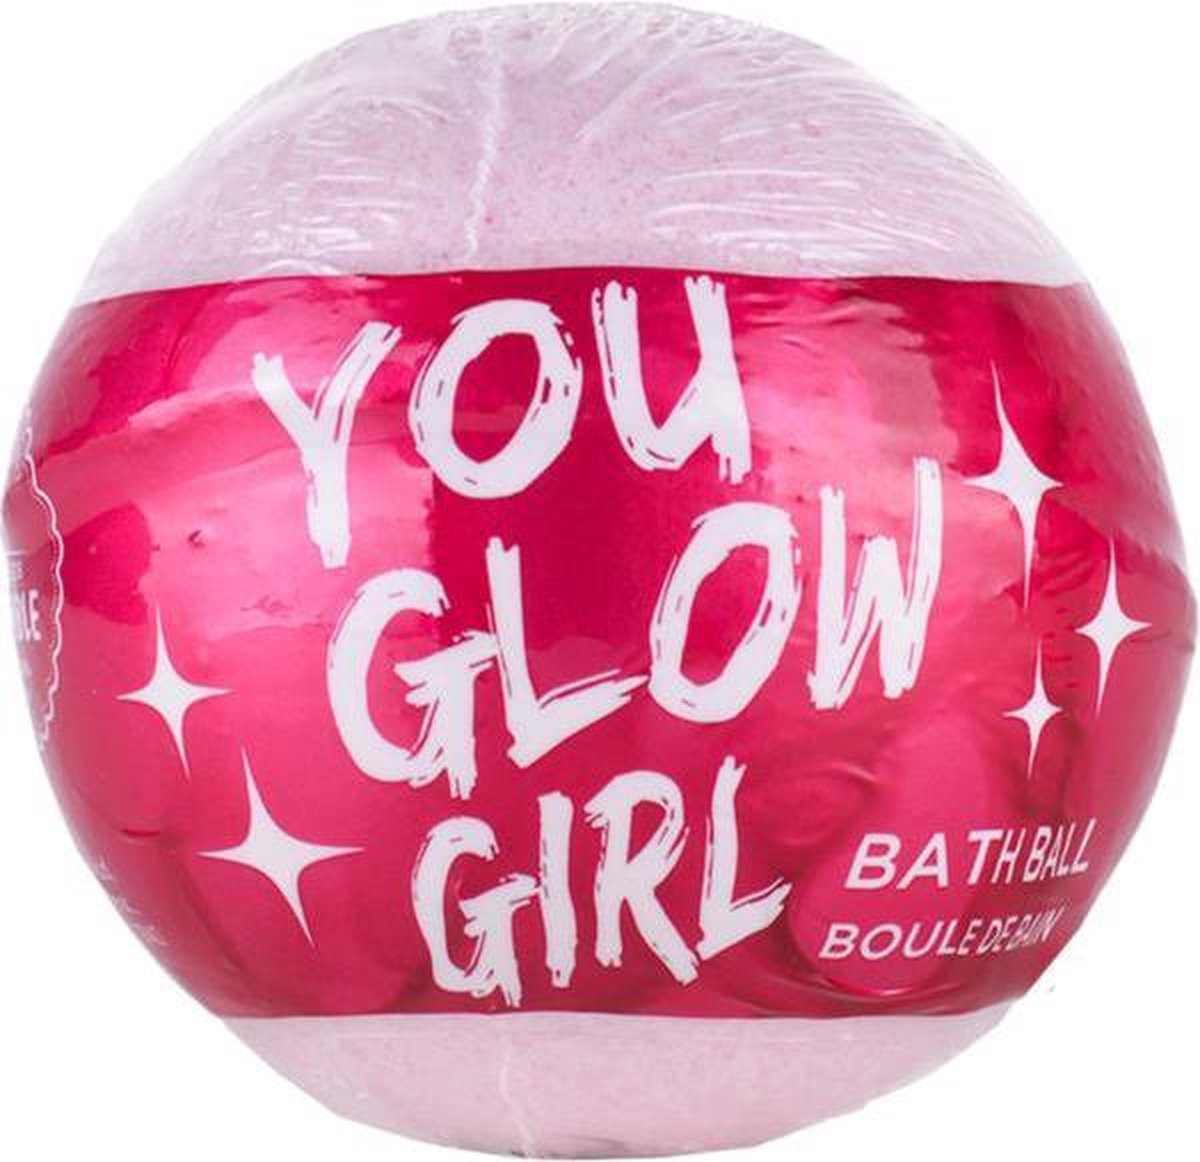 Treets Bath ball you glow girl